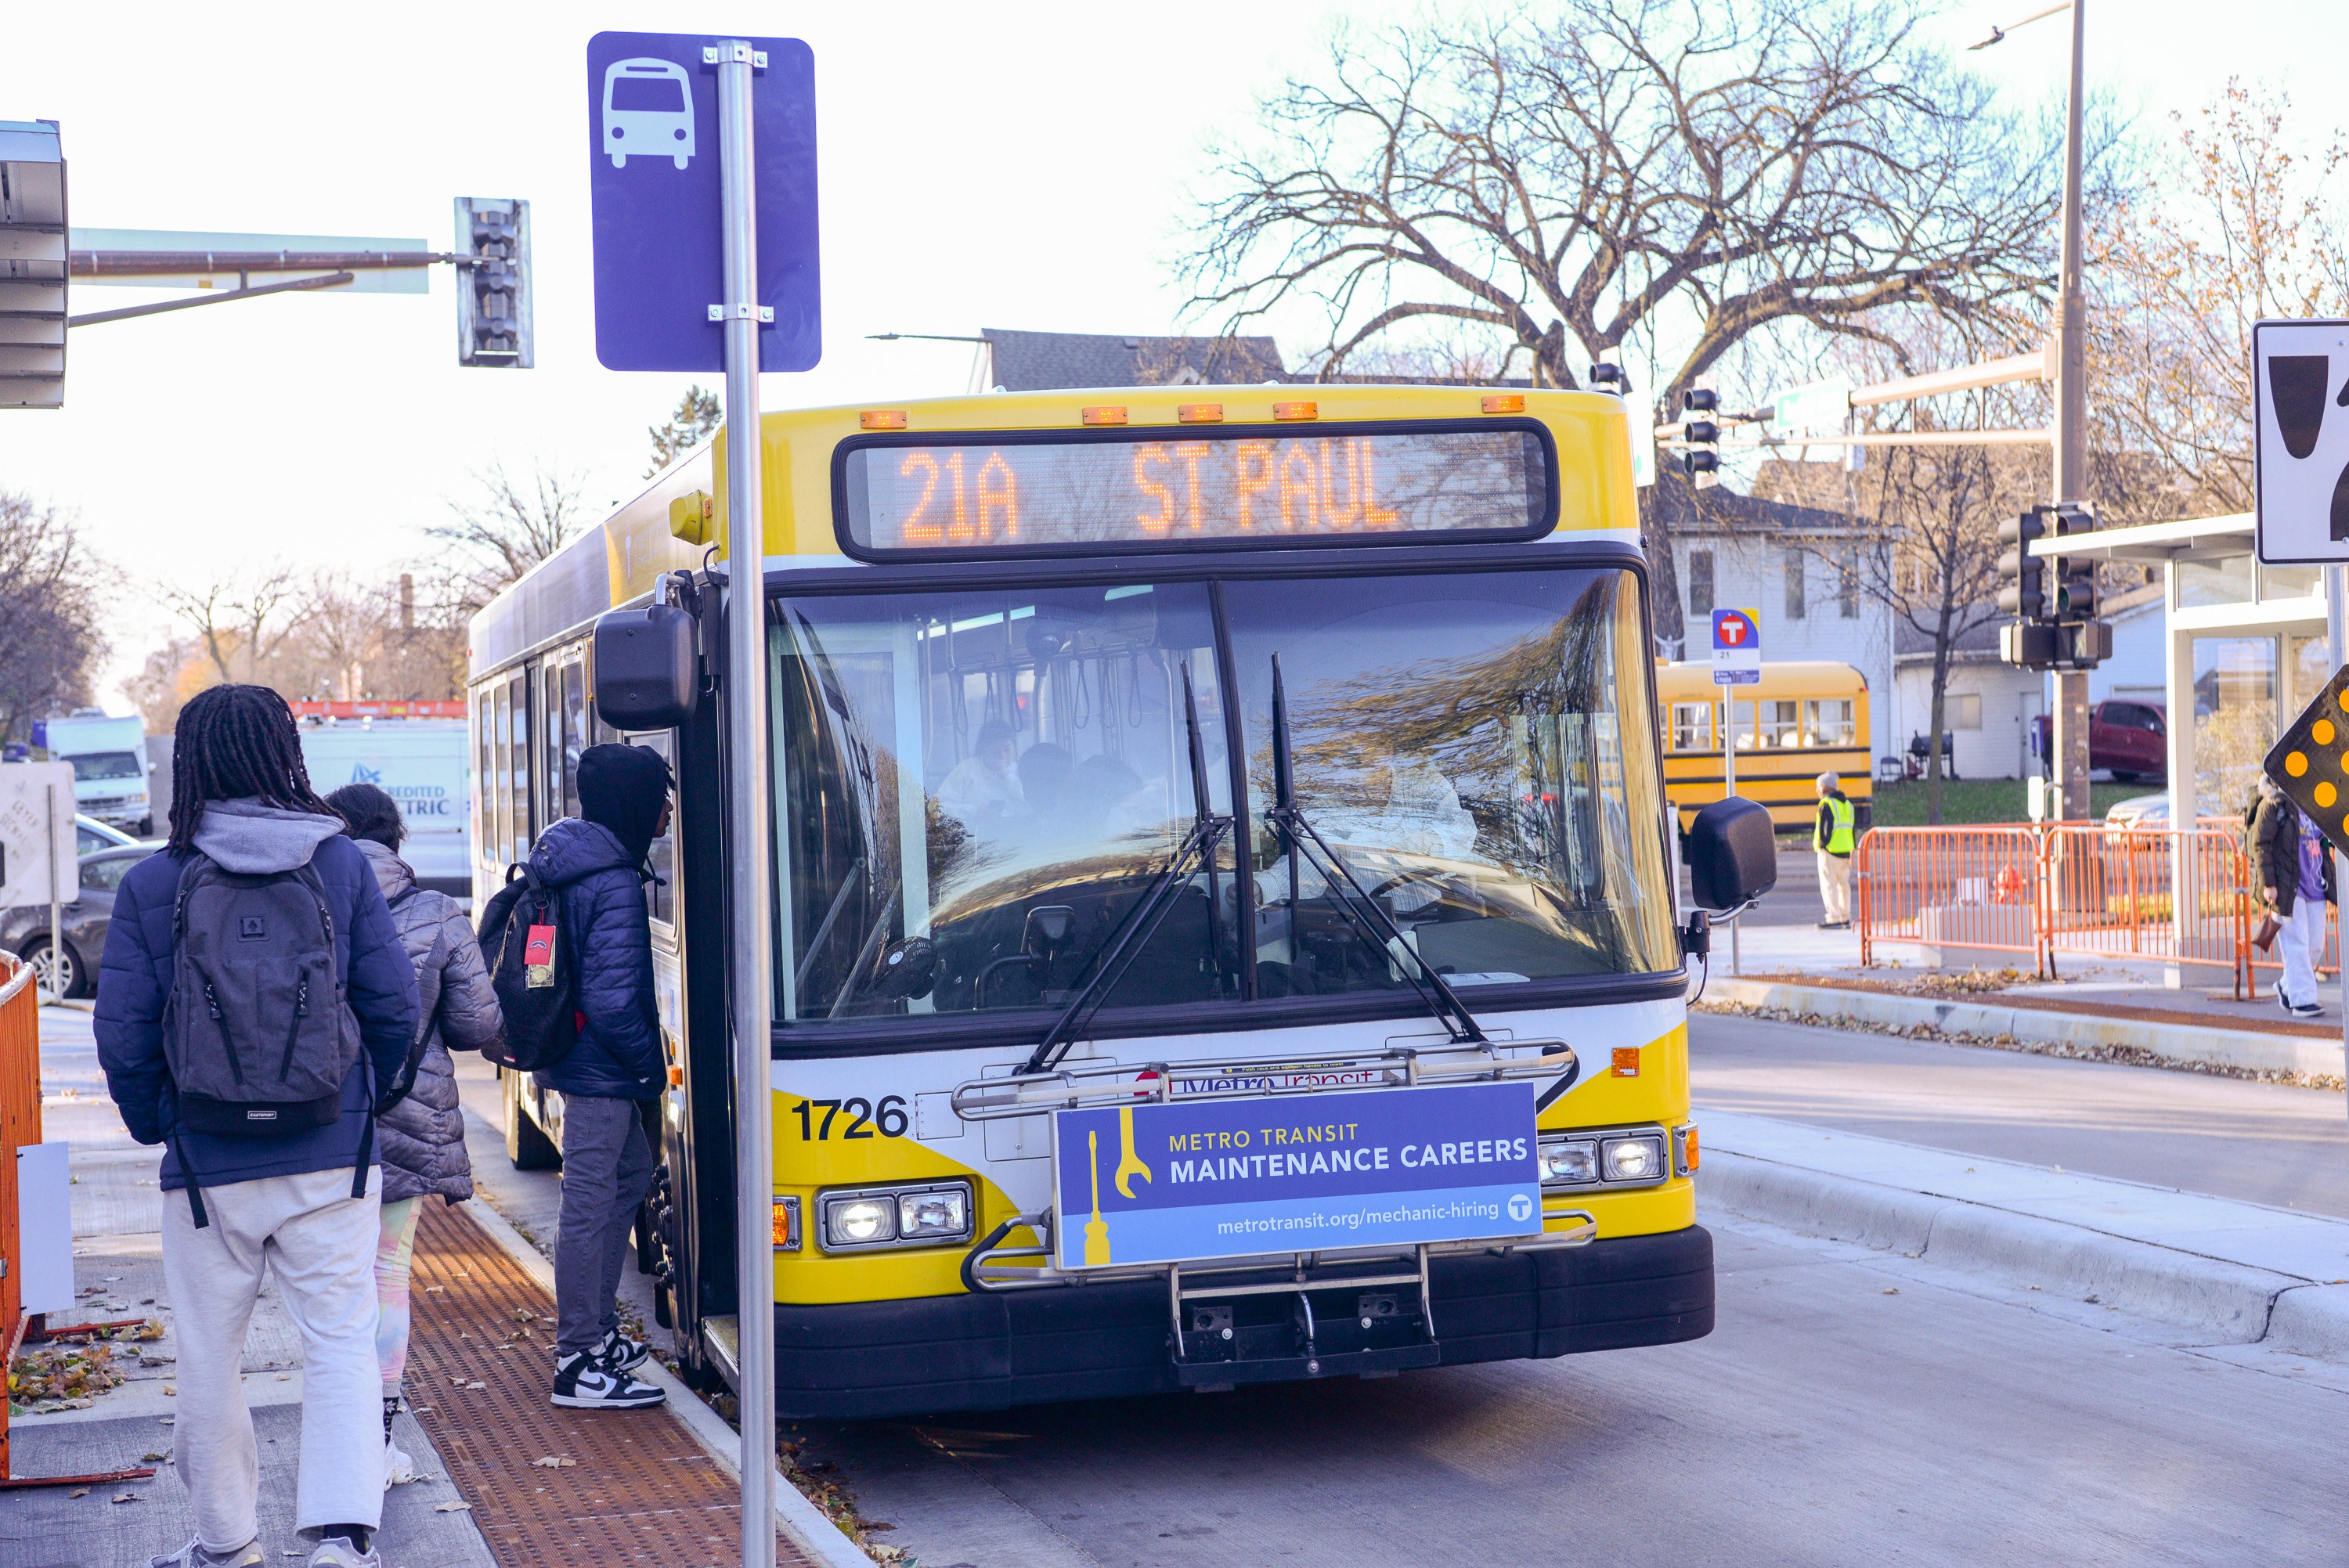 Customers board a Route 21 bus in Saint Paul.